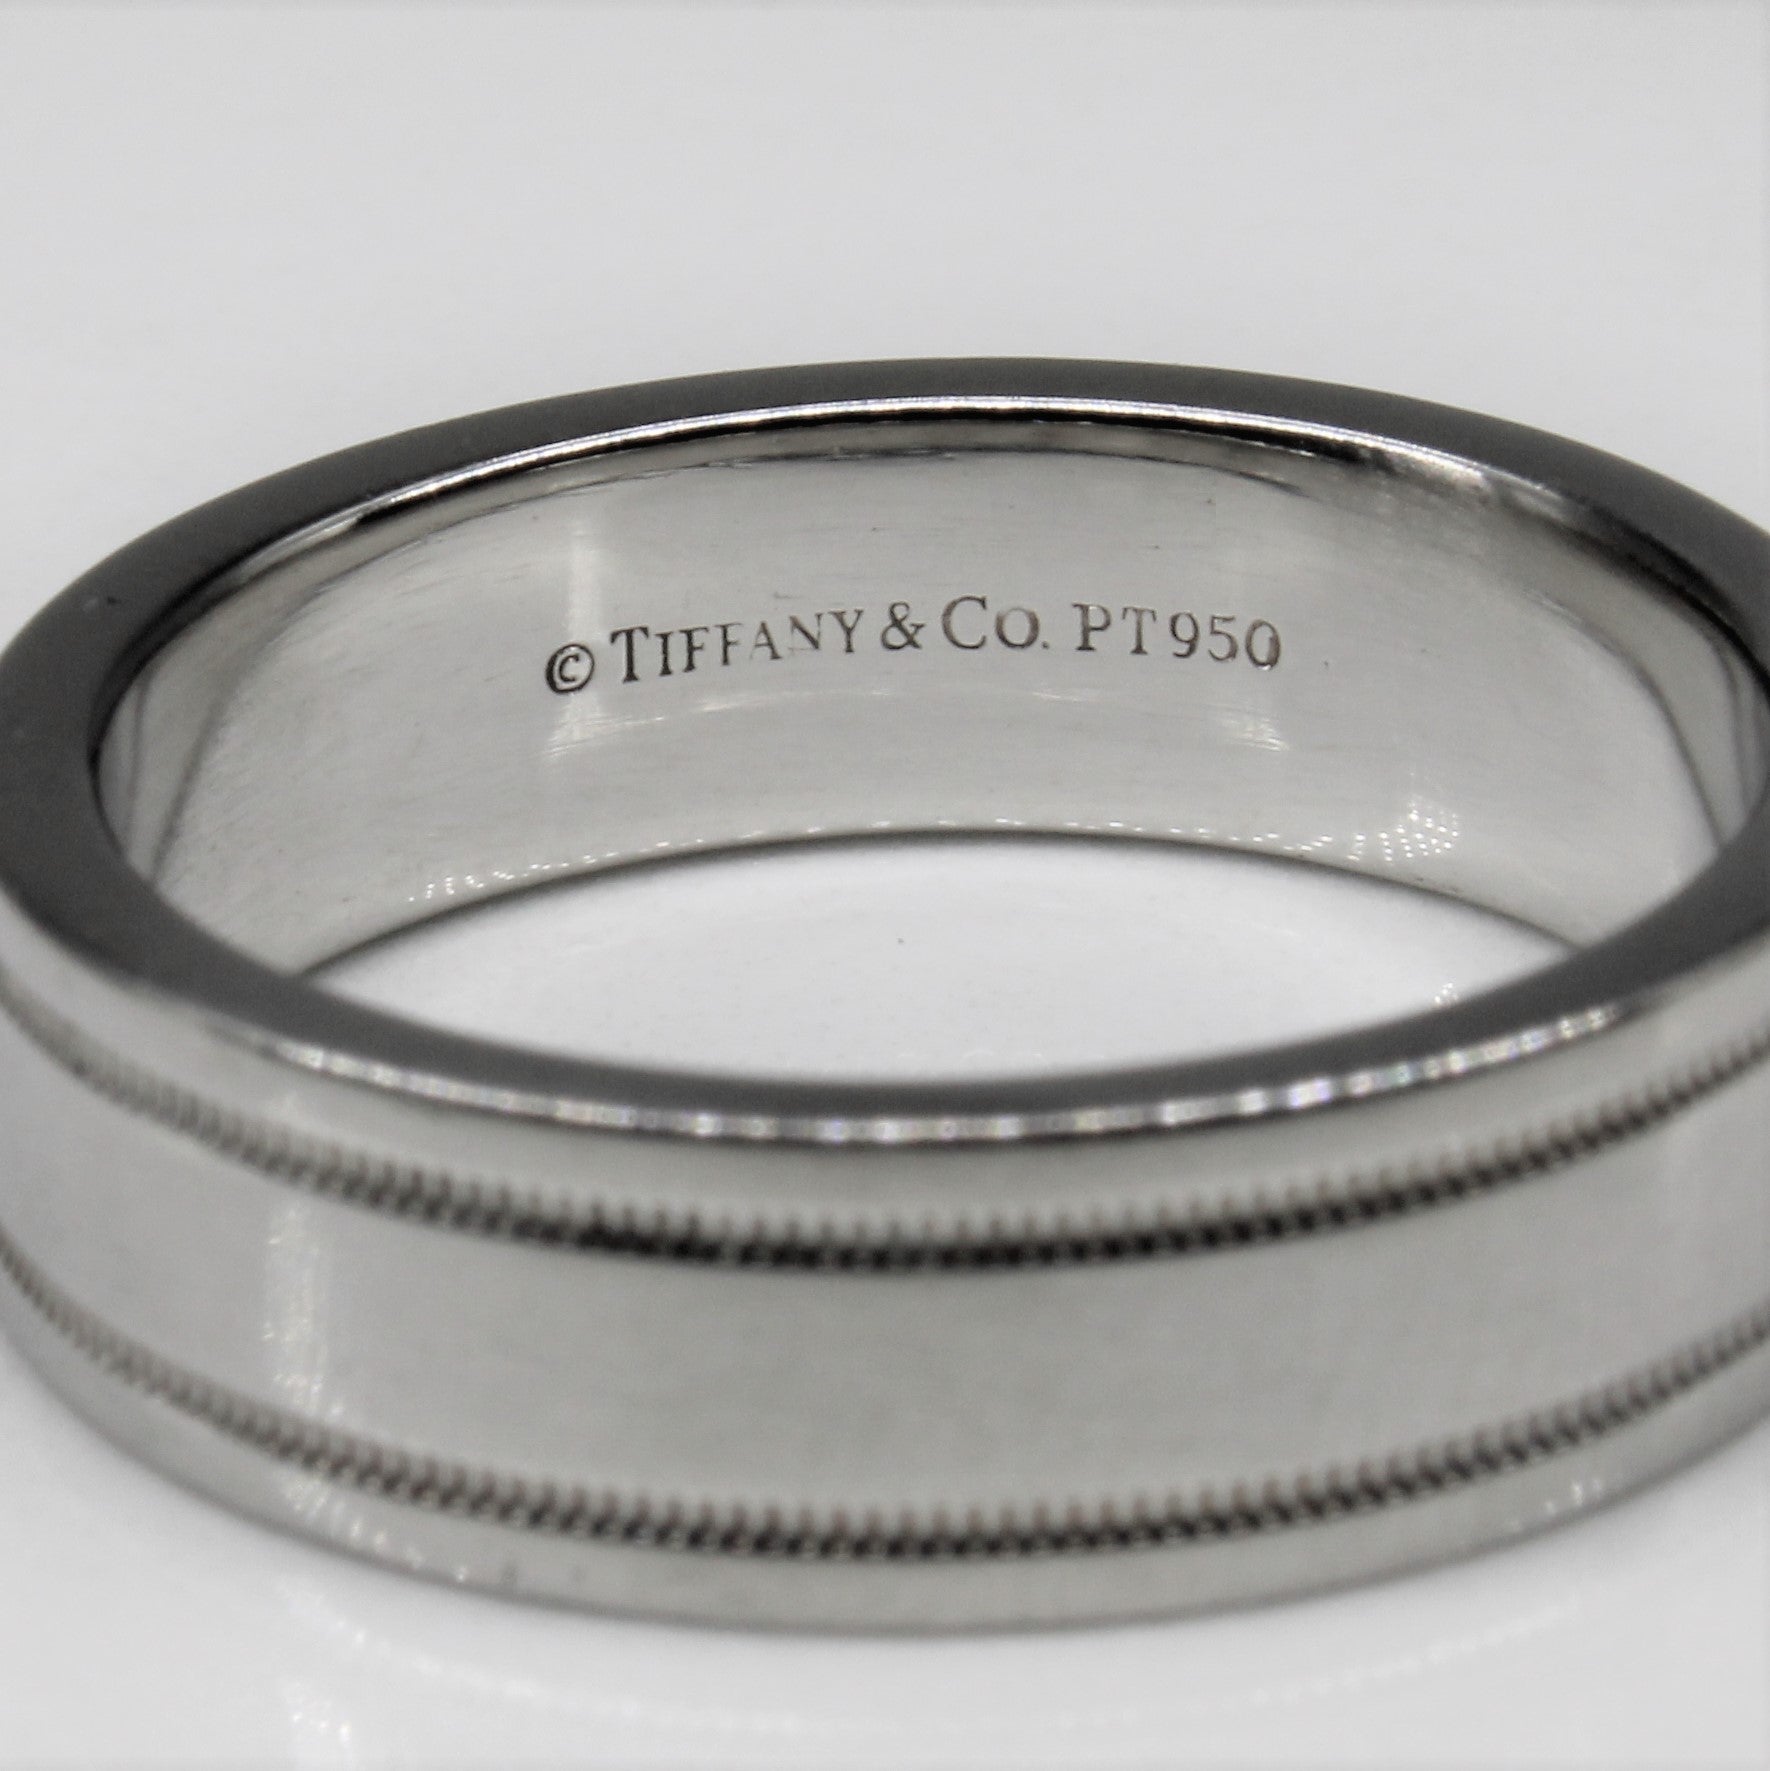 'Tiffany & Co.' Tiffany Together Milgrain Band Ring